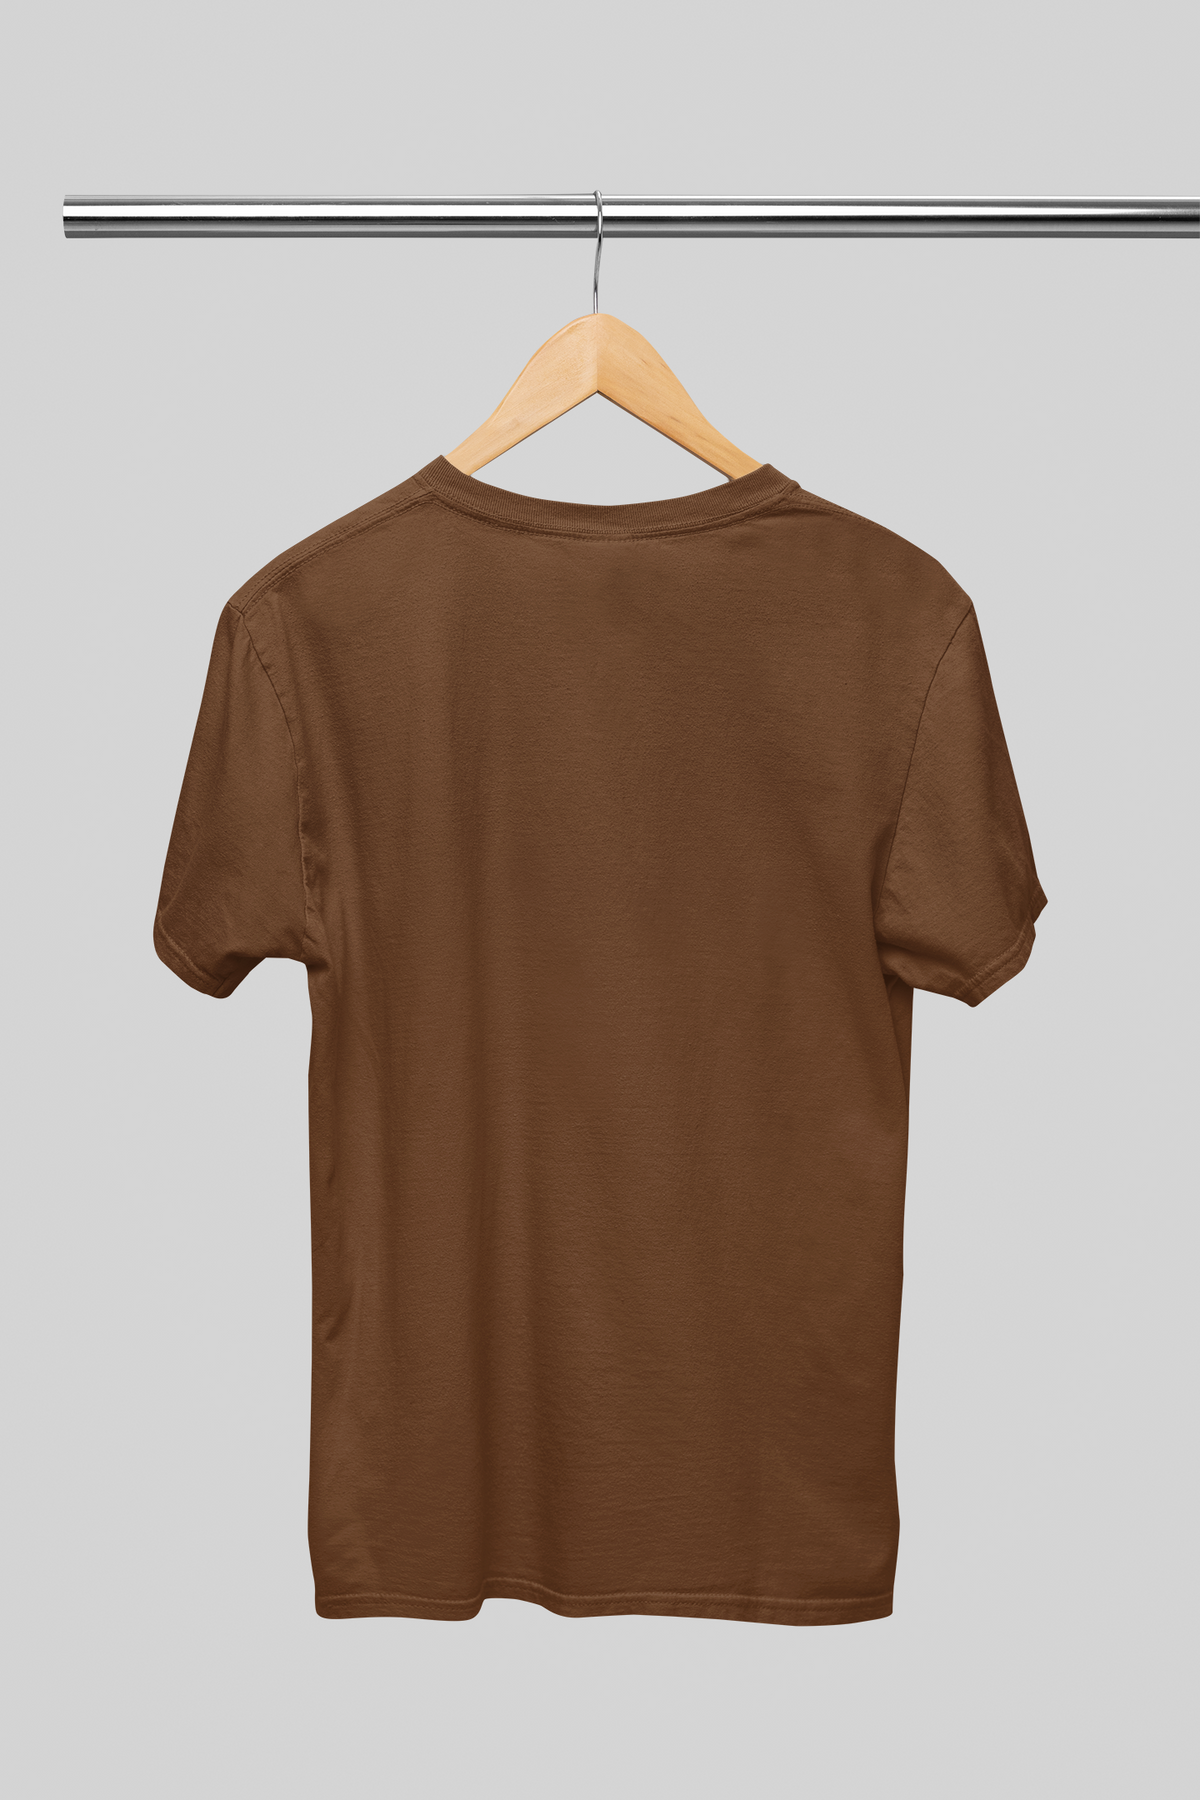 Plain Coffee Brown Unisex T-shirt